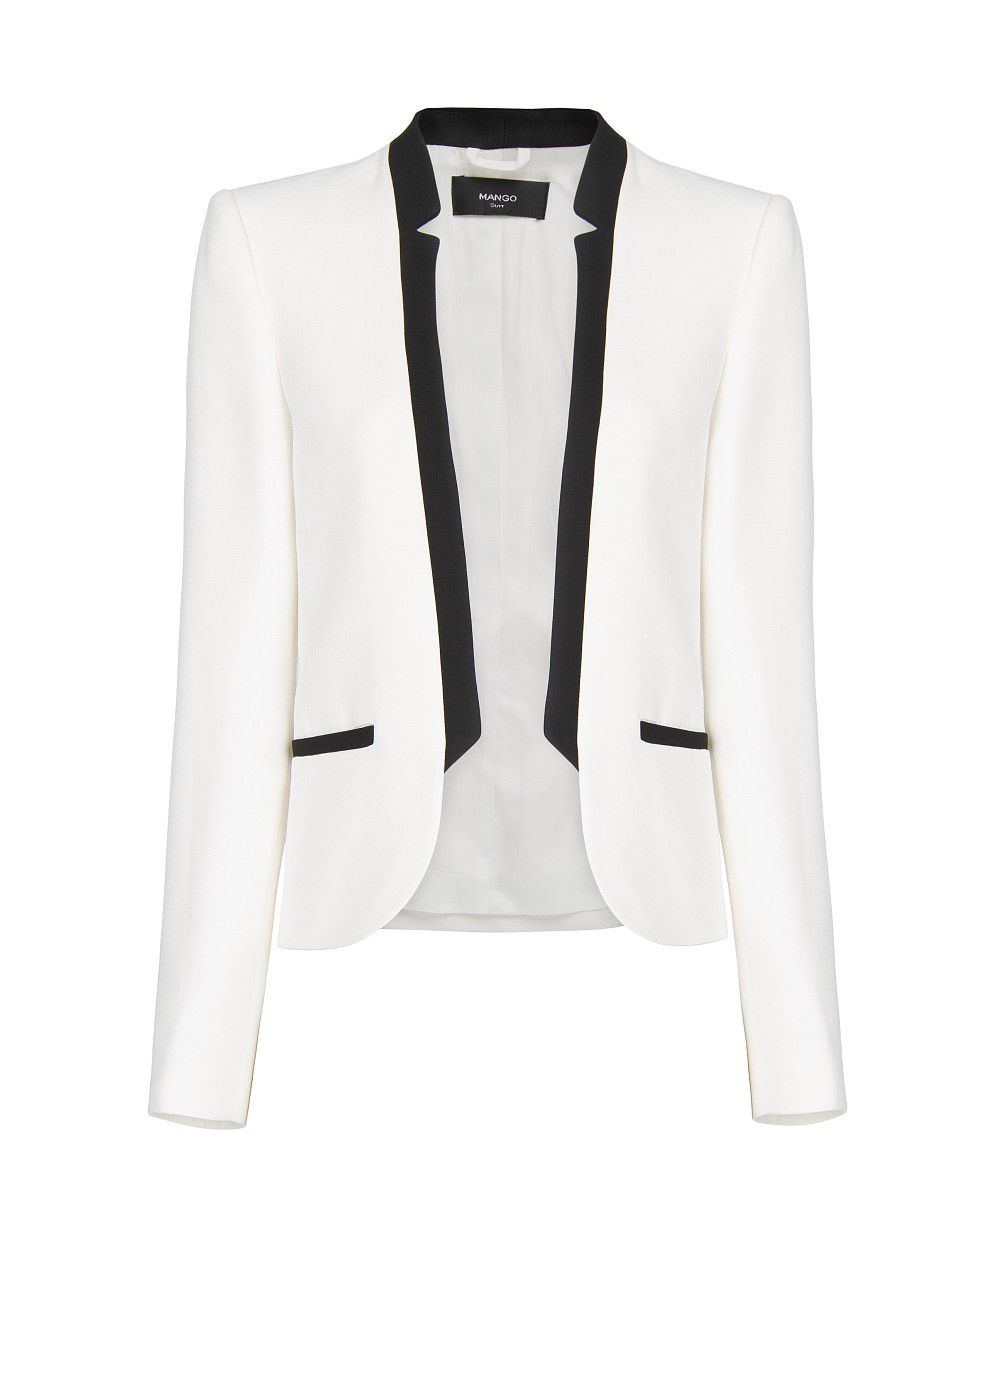 Mango Tuxedo Blazer in White (off white) | Lyst